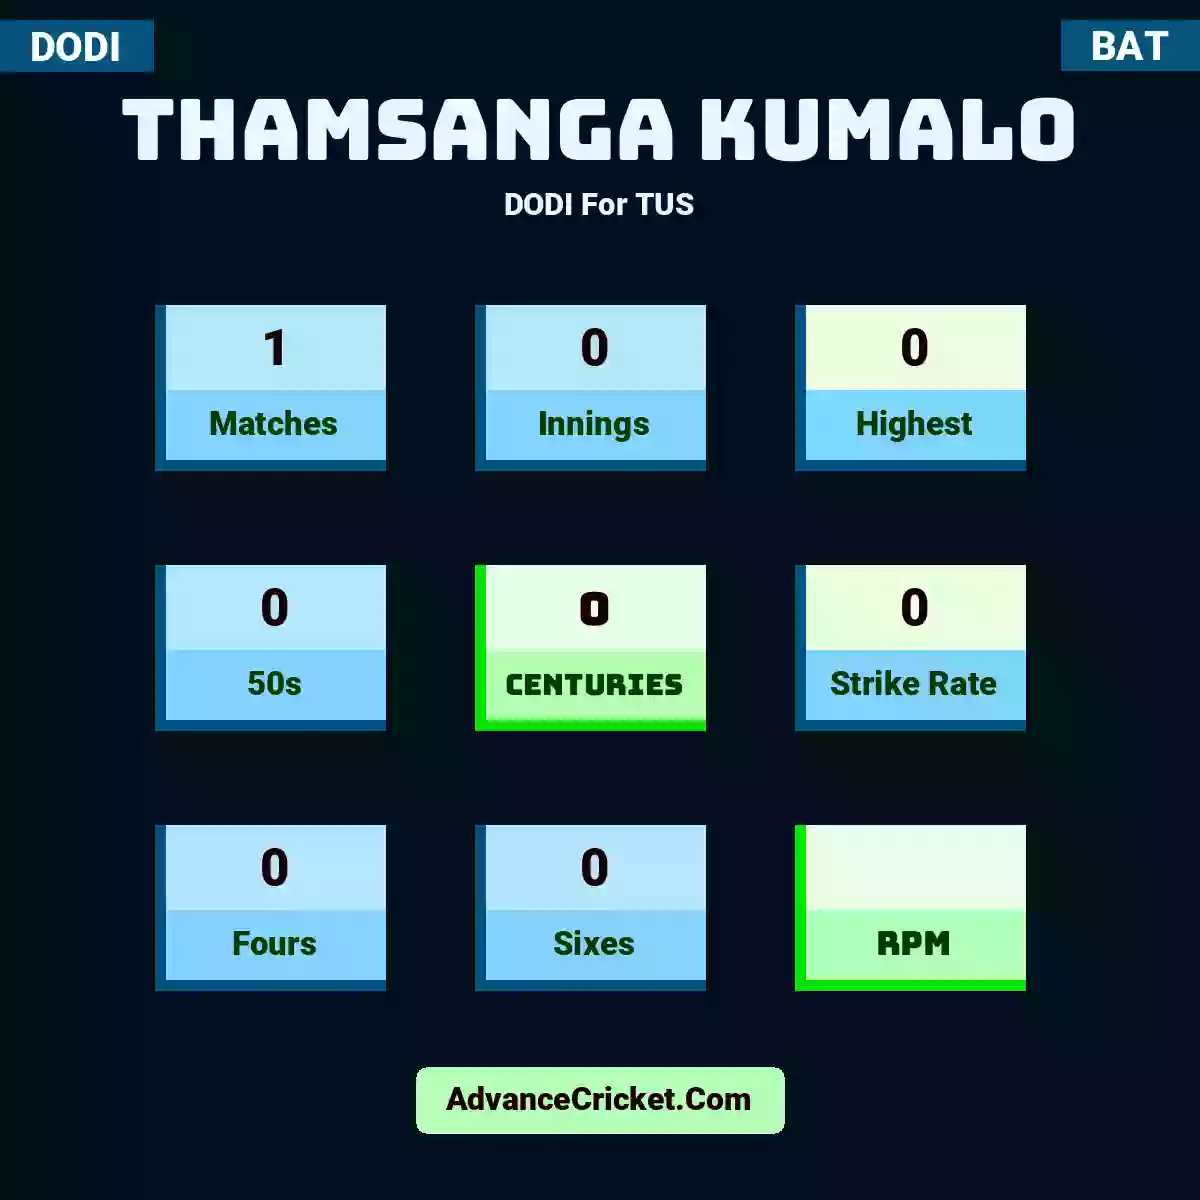 Thamsanga Kumalo DODI  For TUS, Thamsanga Kumalo played 1 matches, scored 0 runs as highest, 0 half-centuries, and 0 centuries, with a strike rate of 0. T.Kumalo hit 0 fours and 0 sixes.